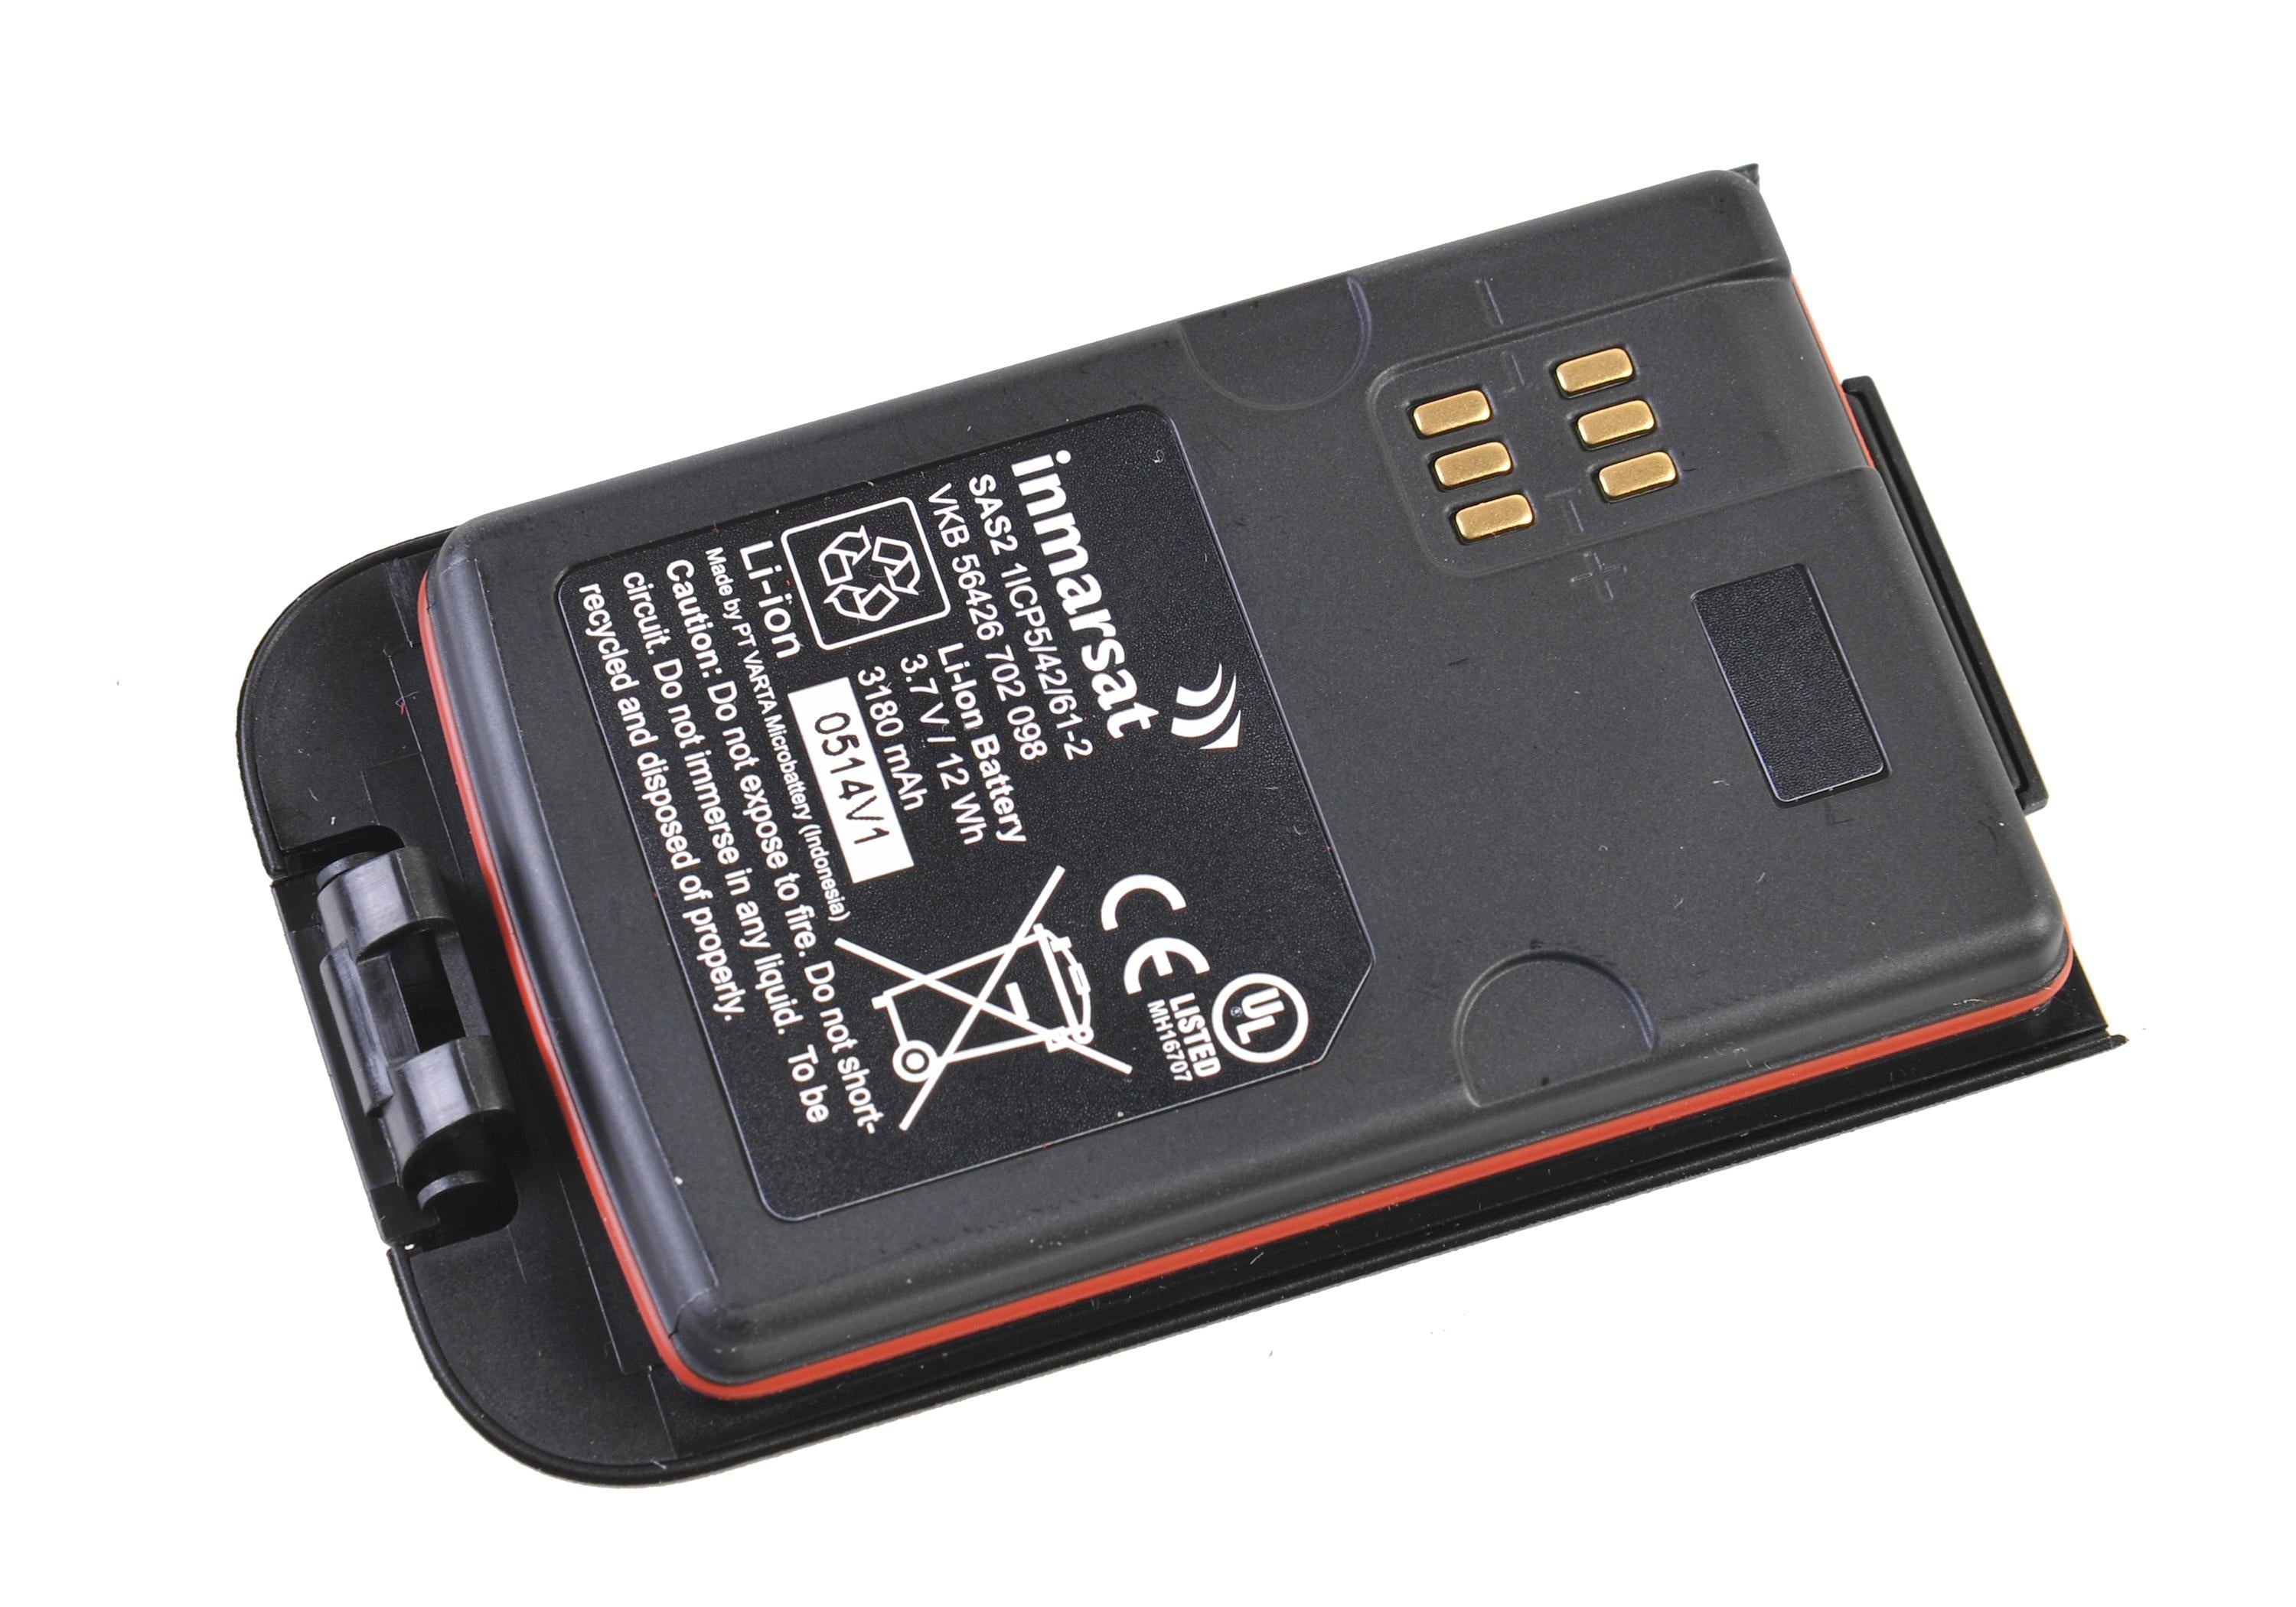 Battery for IsatPhone 2 Satellite Phones